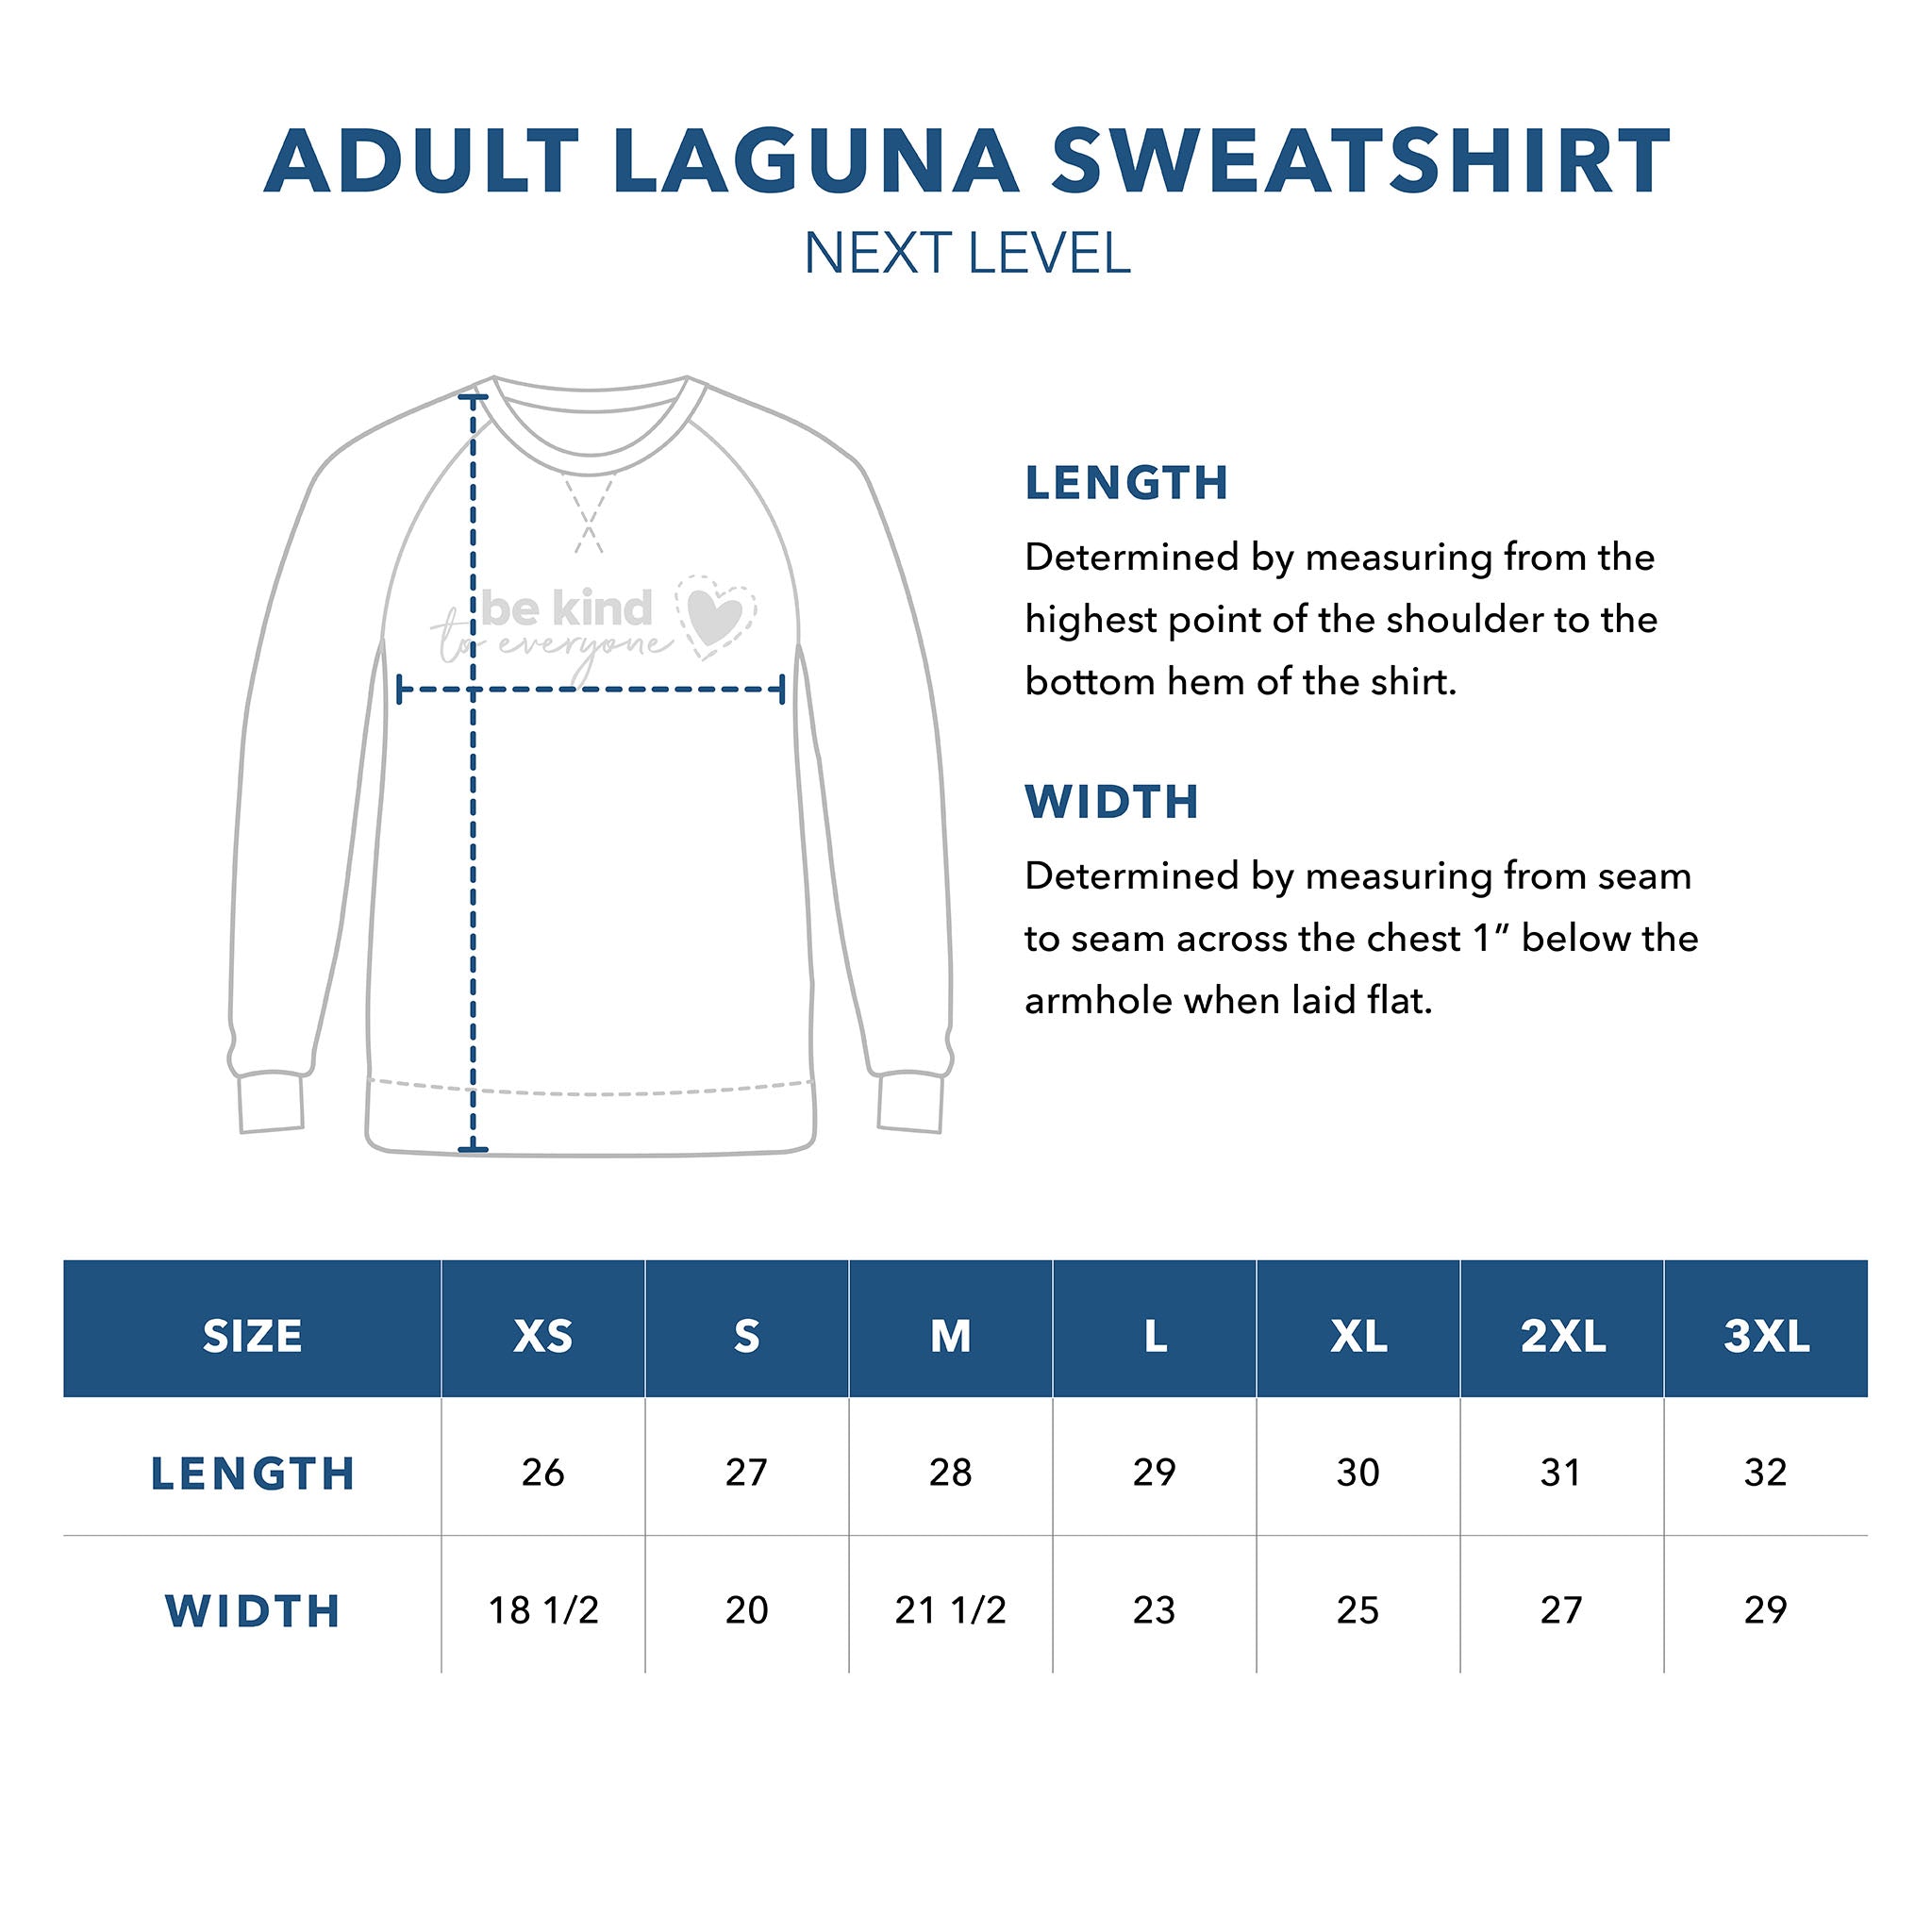 Laguna Sweatshirt Sizing Guide